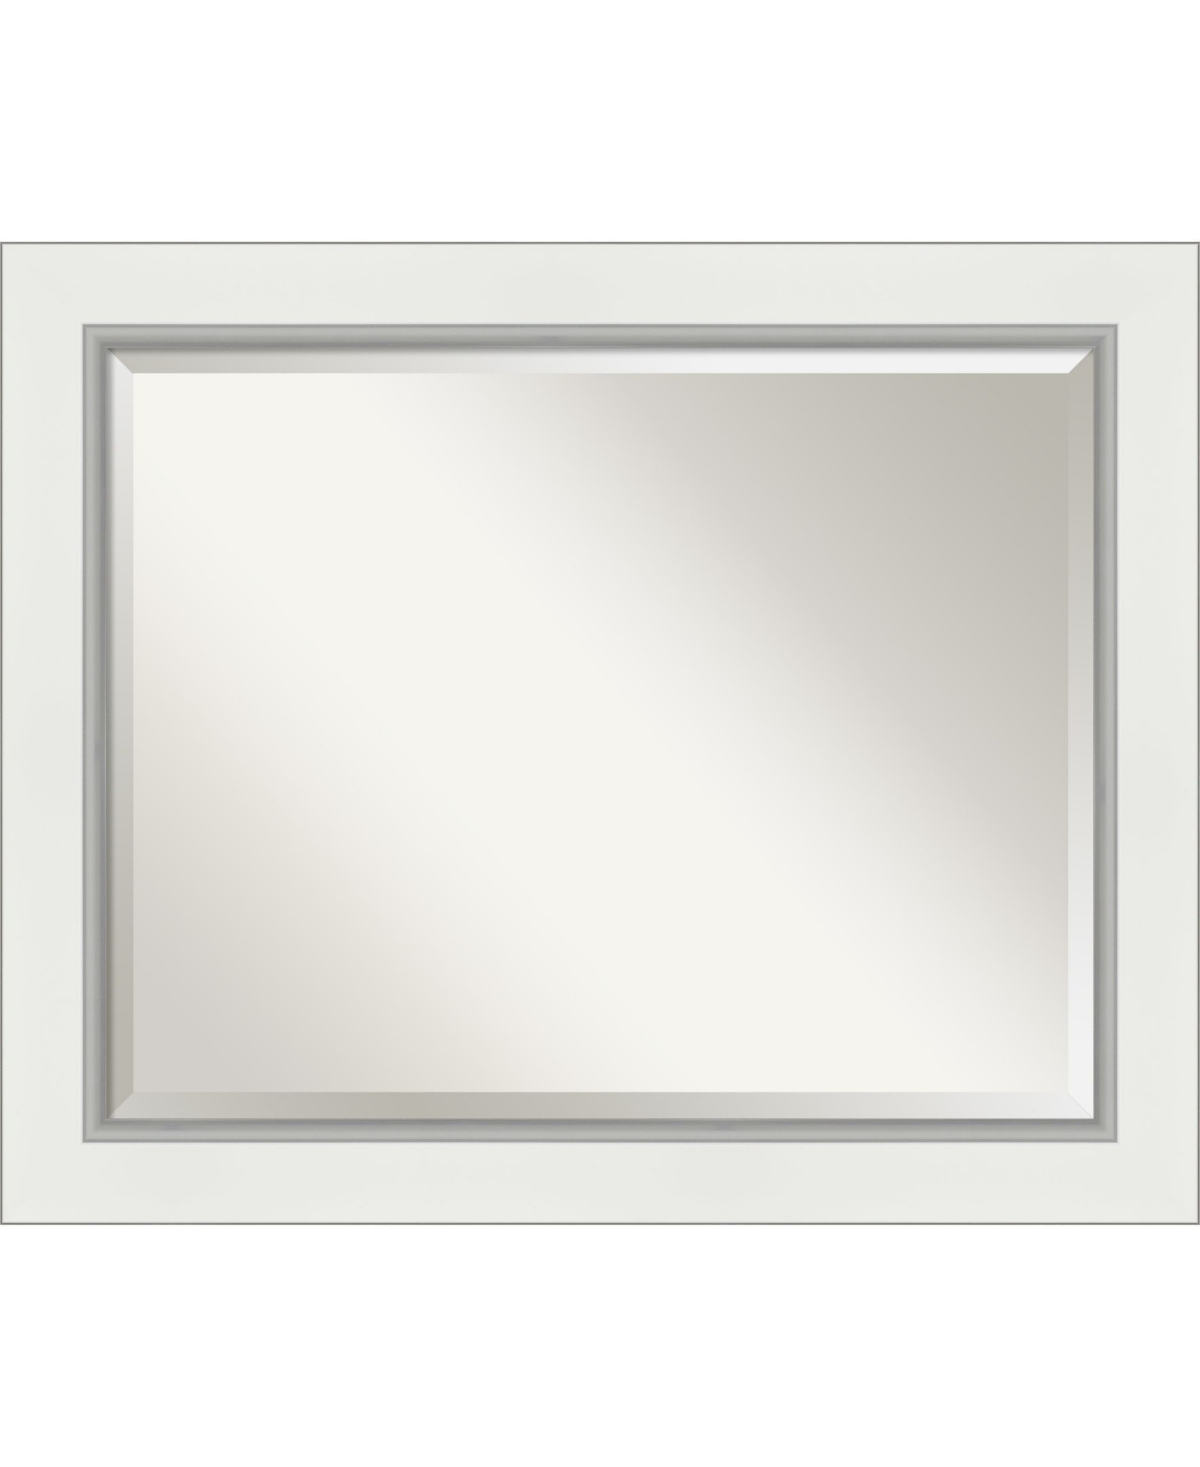 Eva Silver-tone Framed Bathroom Vanity Wall Mirror, 33.25" x 27.25" - White